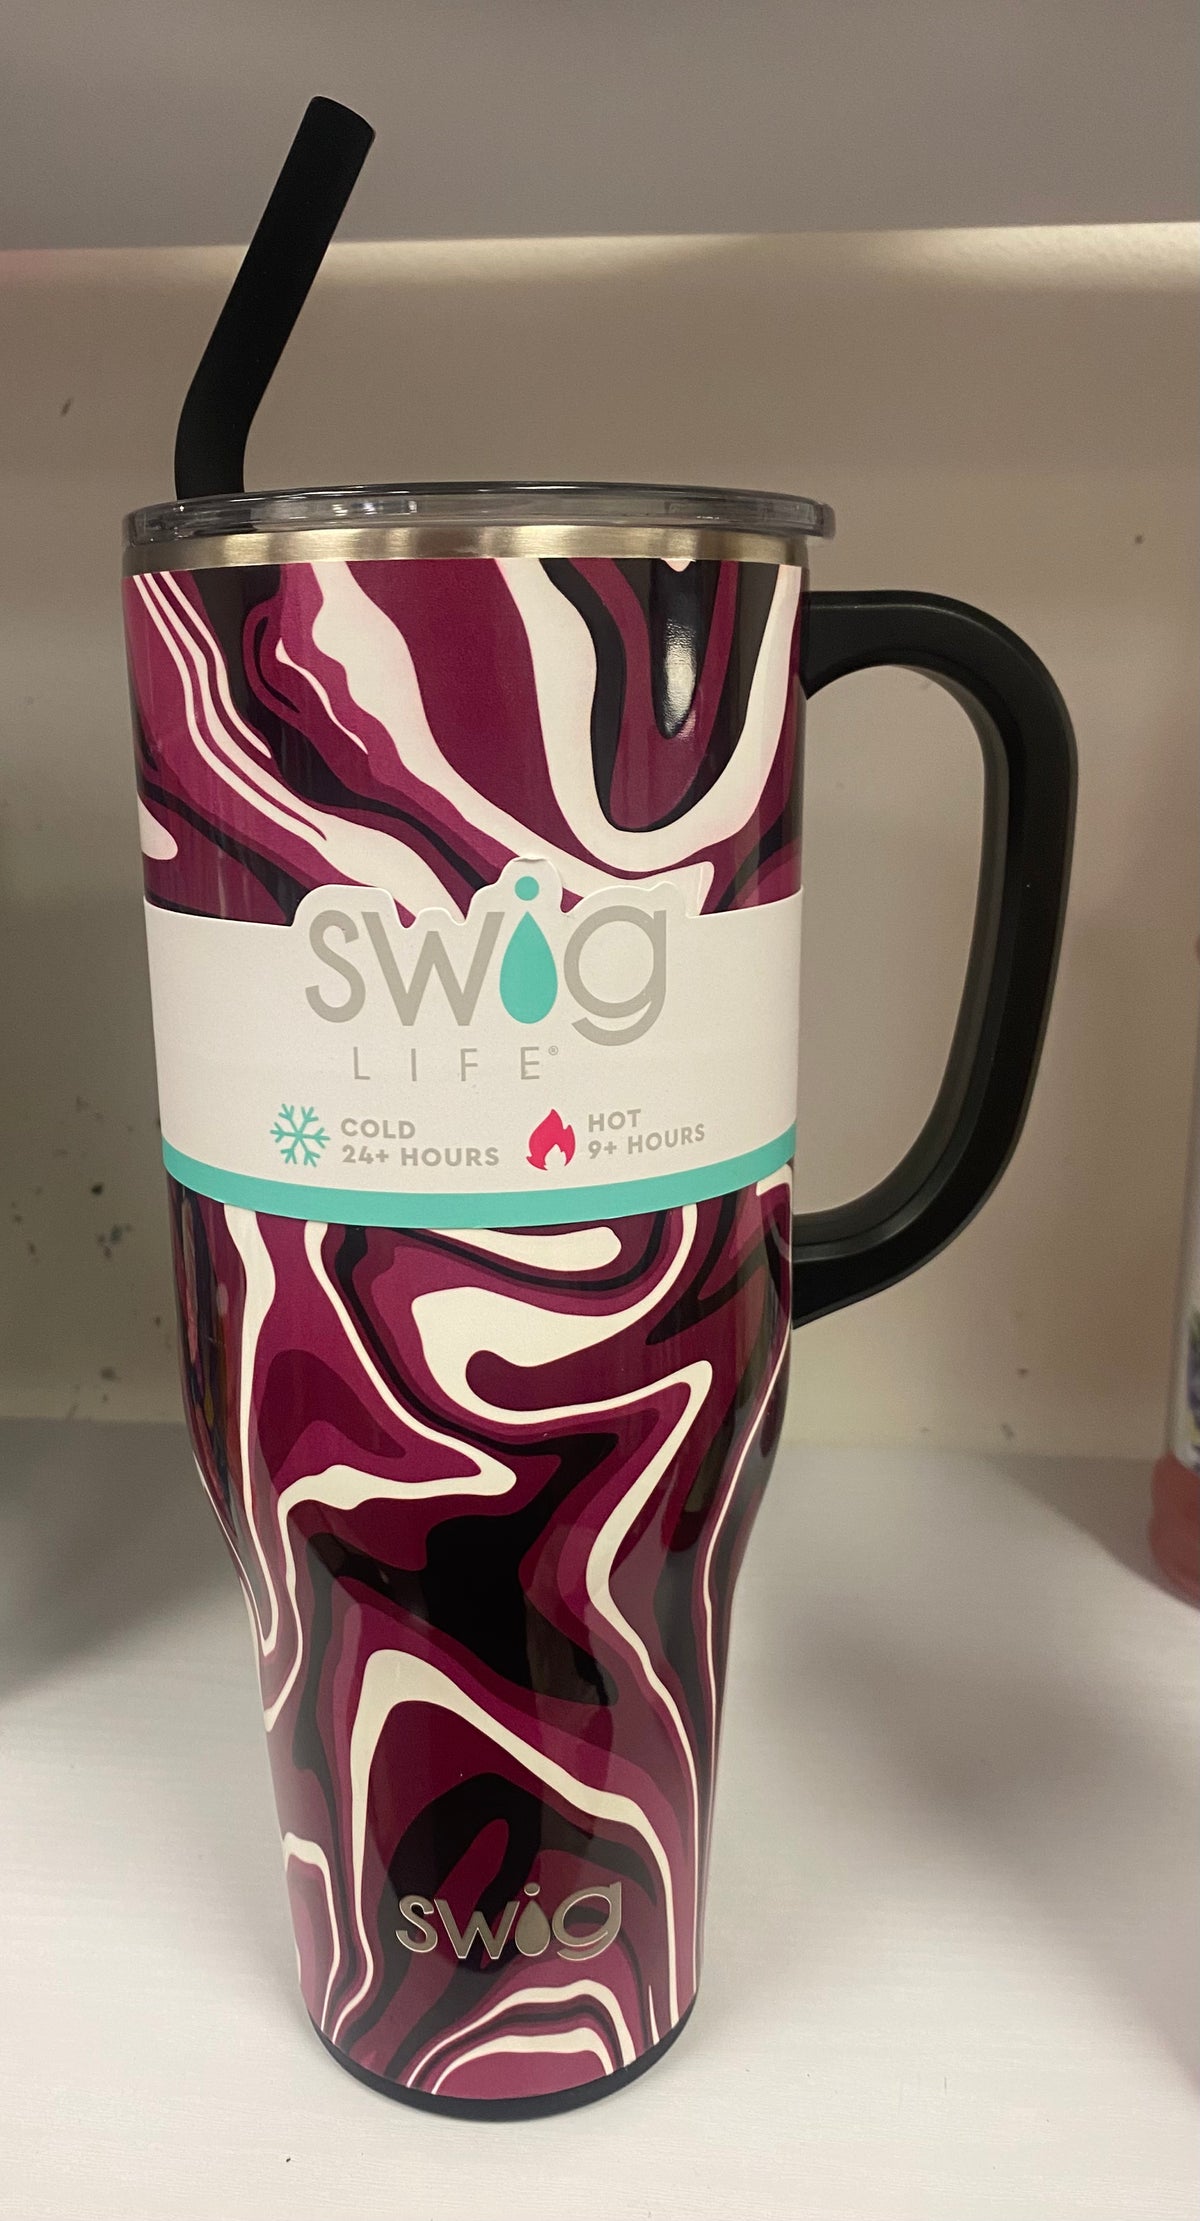 Swig Caliente 40oz Mega Mug